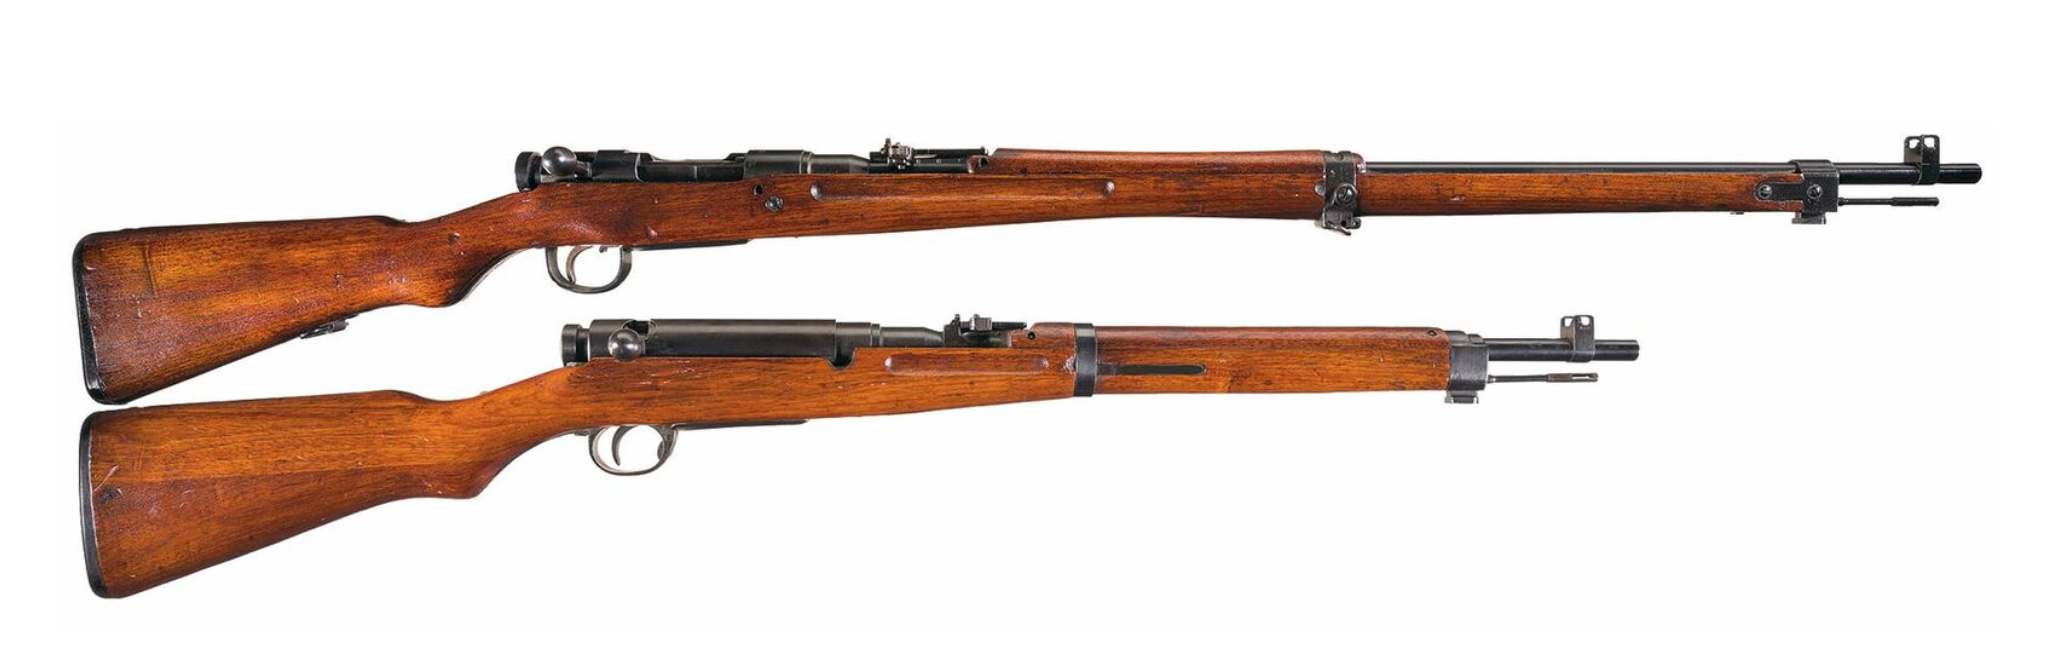 Two Arisaka bolt-action rifles.